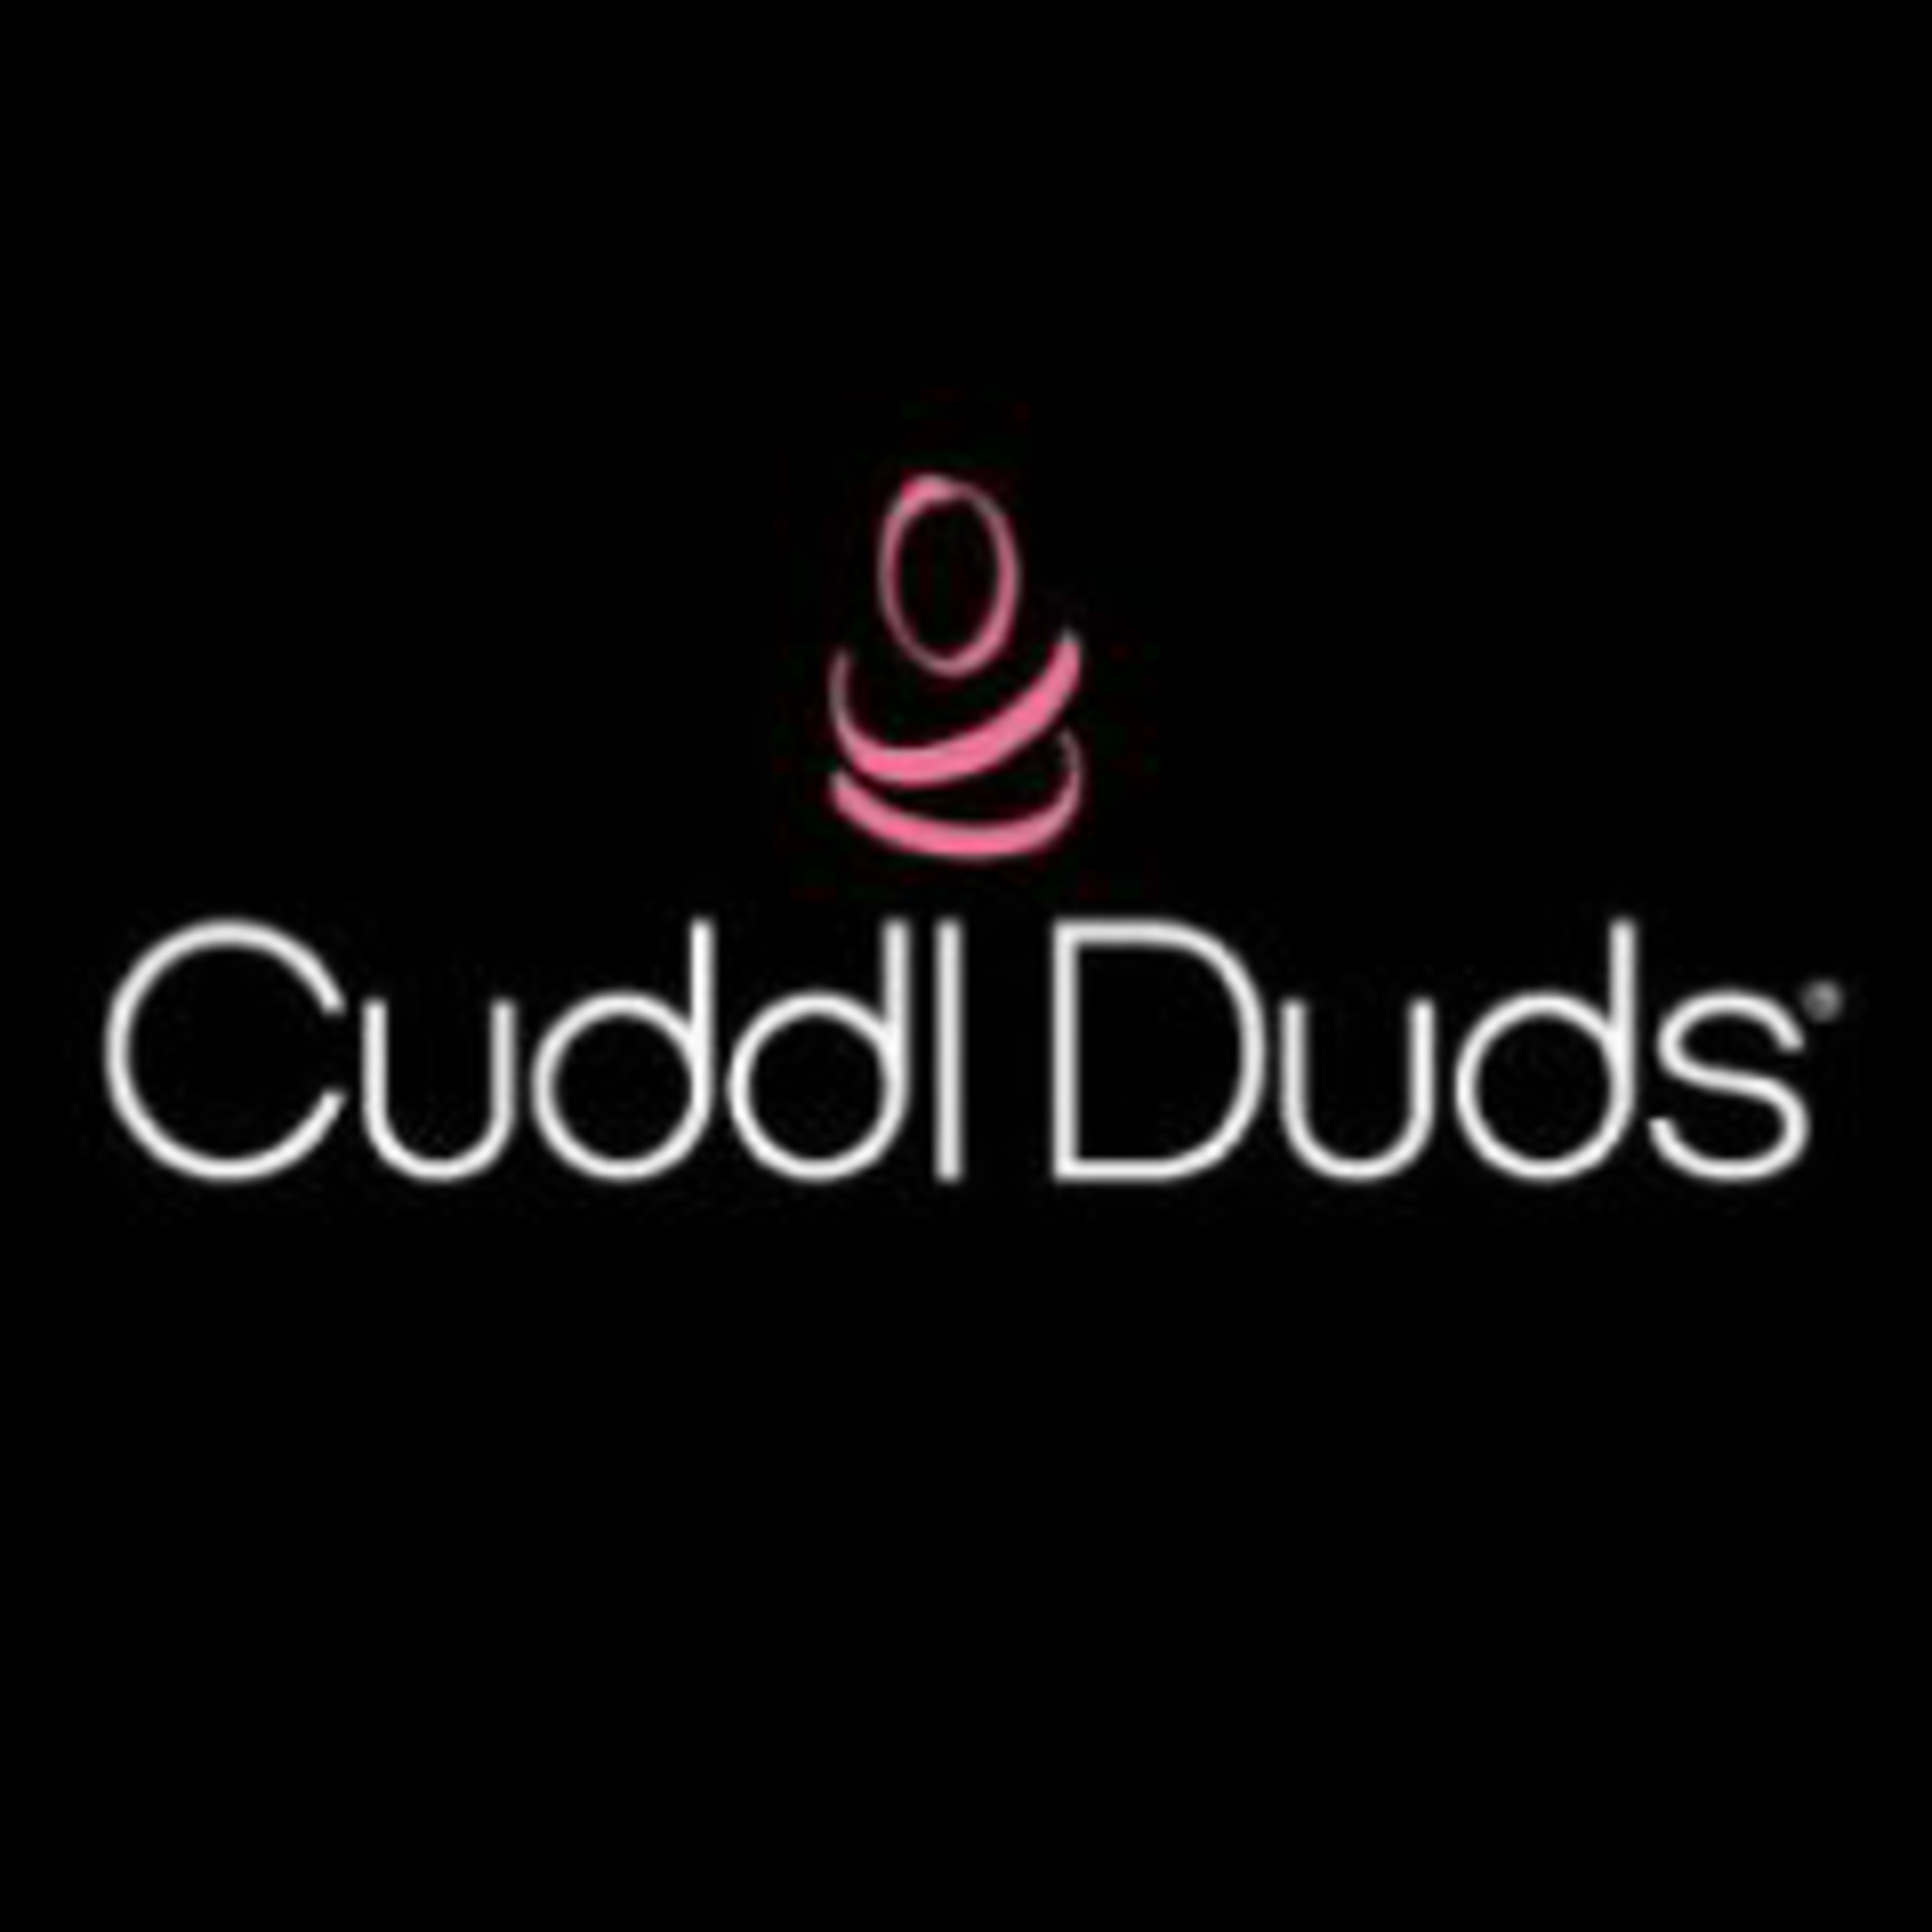 CuddlDuds Code